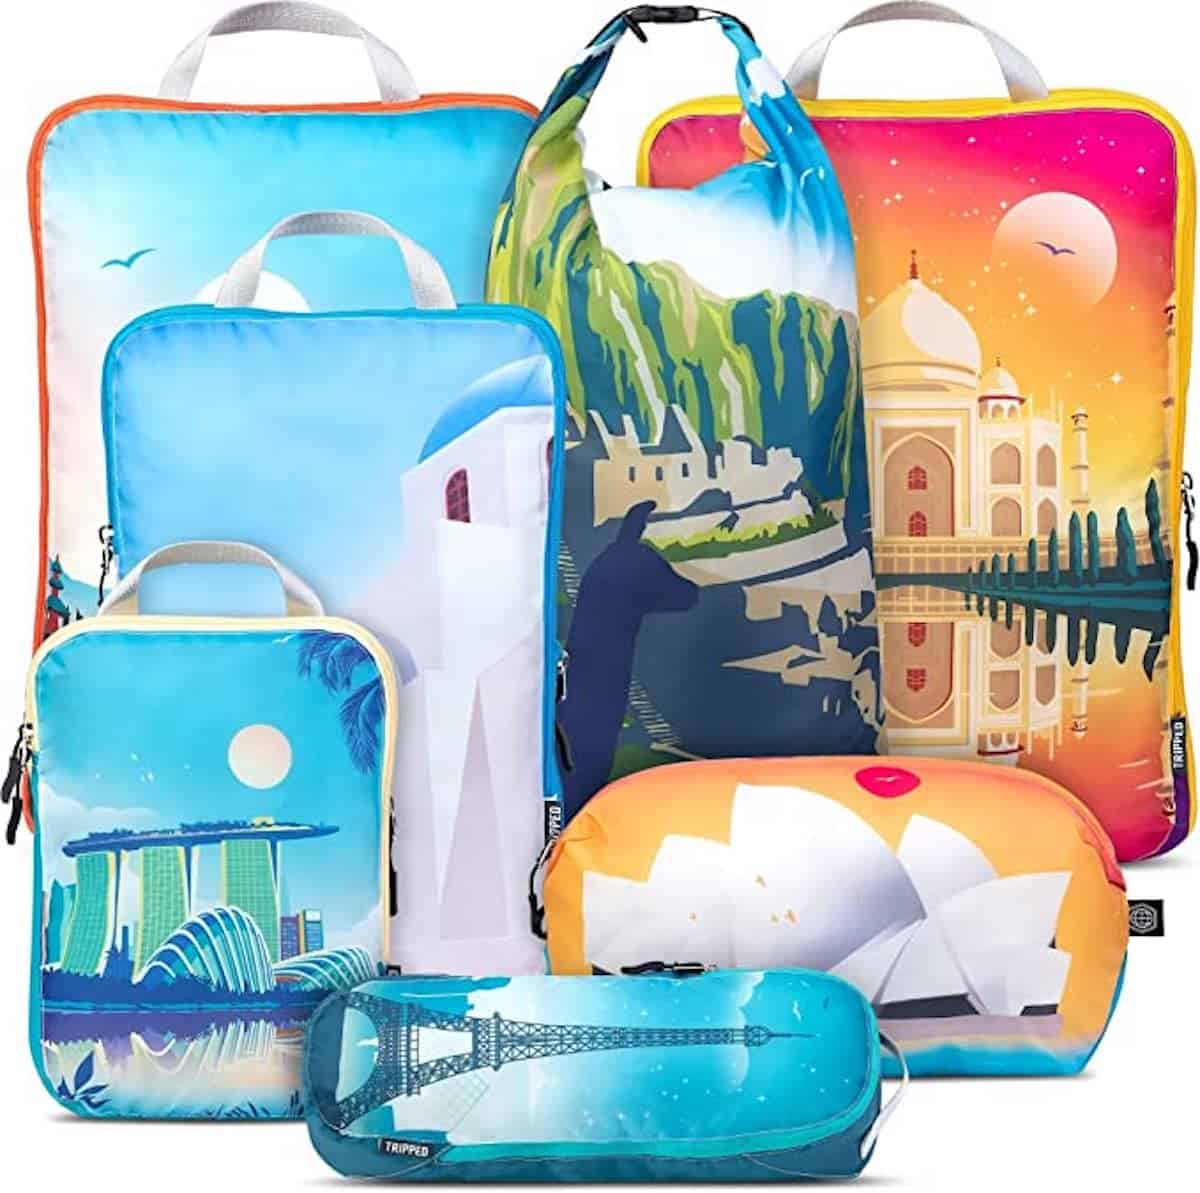 Bucket List Travel Bags